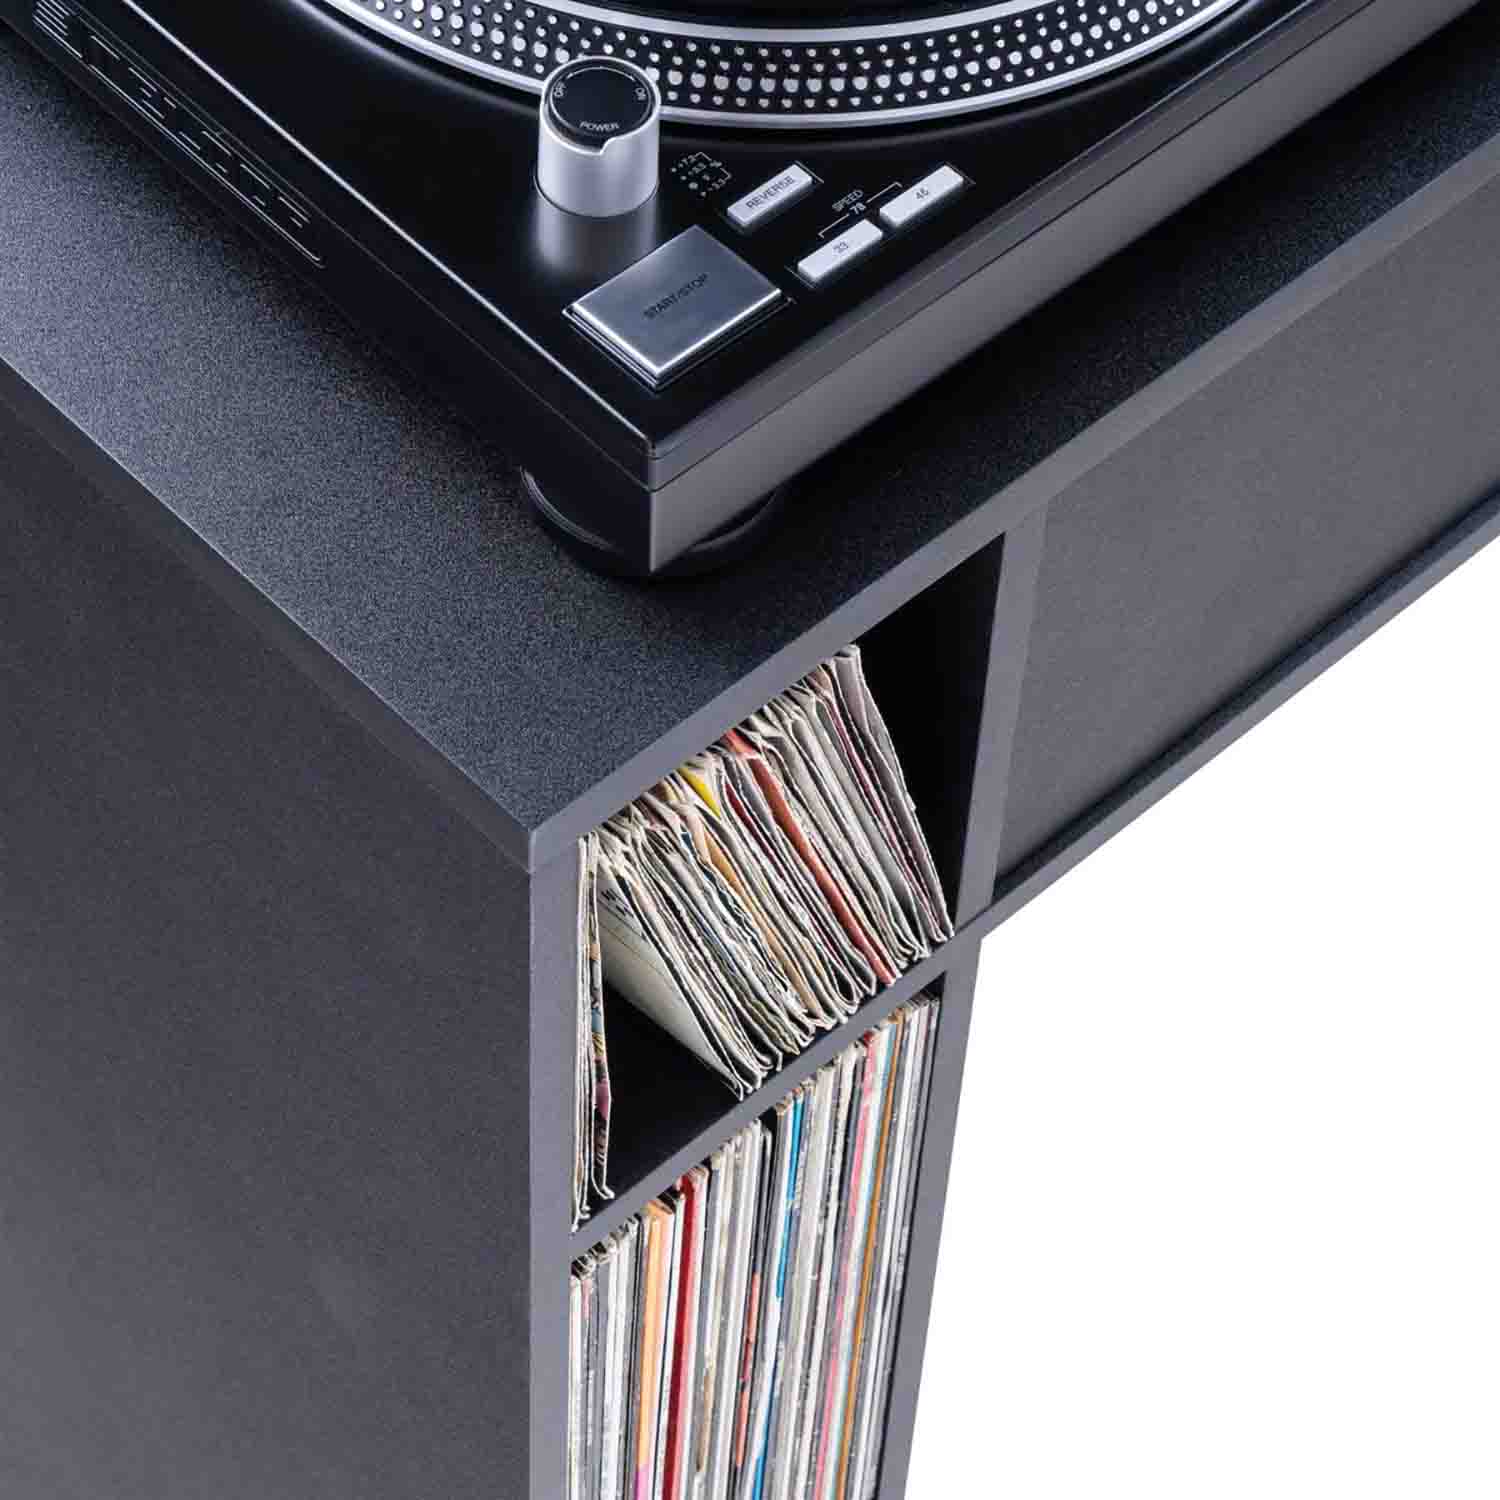 Glorious Modular DJ Mix Station with 6-Part Design - White - Hollywood DJ